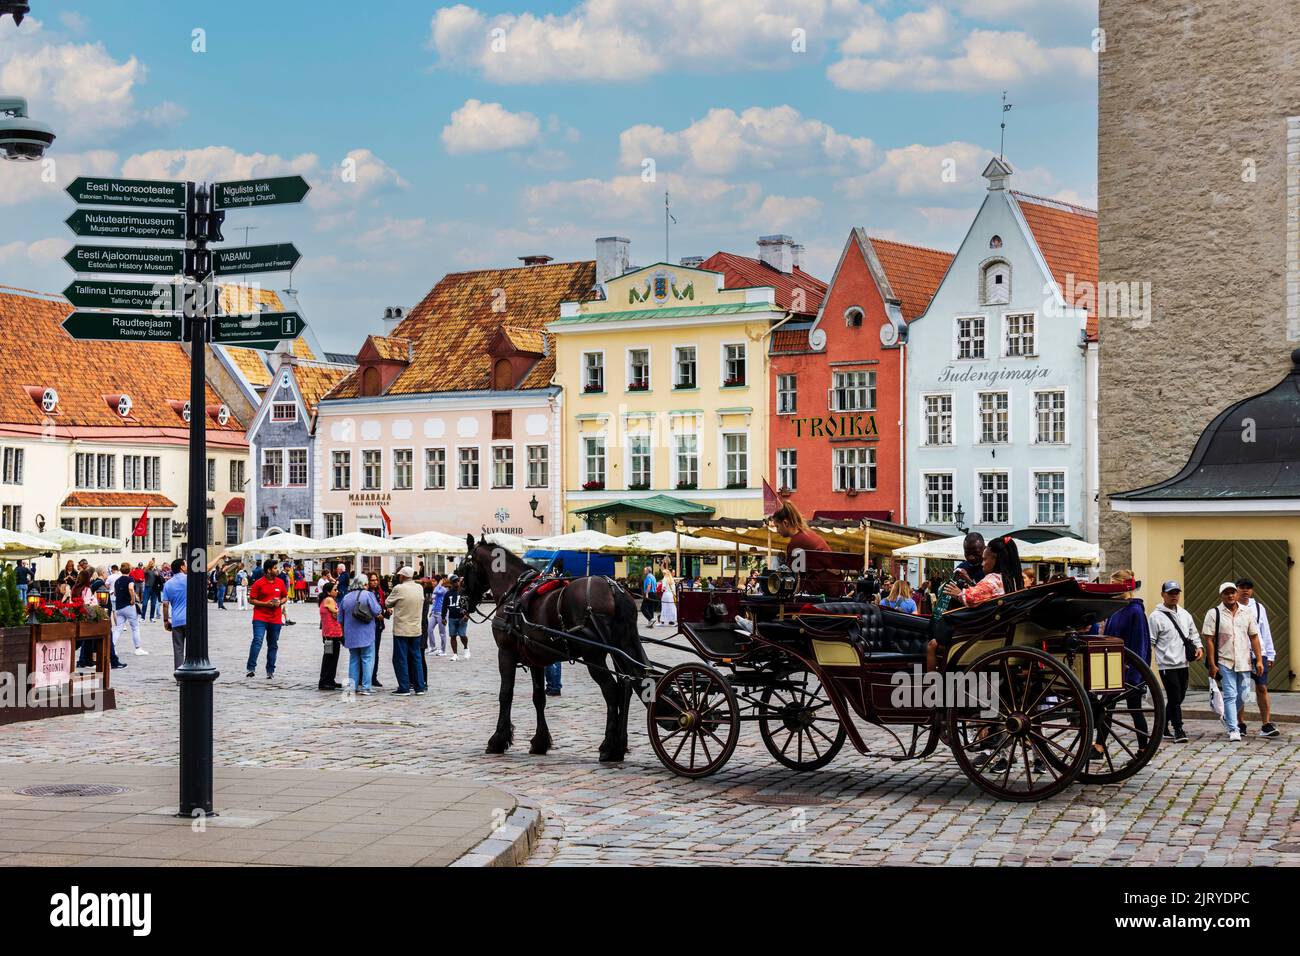 Market square with historic buildings and horse-drawn carriage, Estonian capital of Tallinn, Estonia, Baltics, Europe Stock Photo